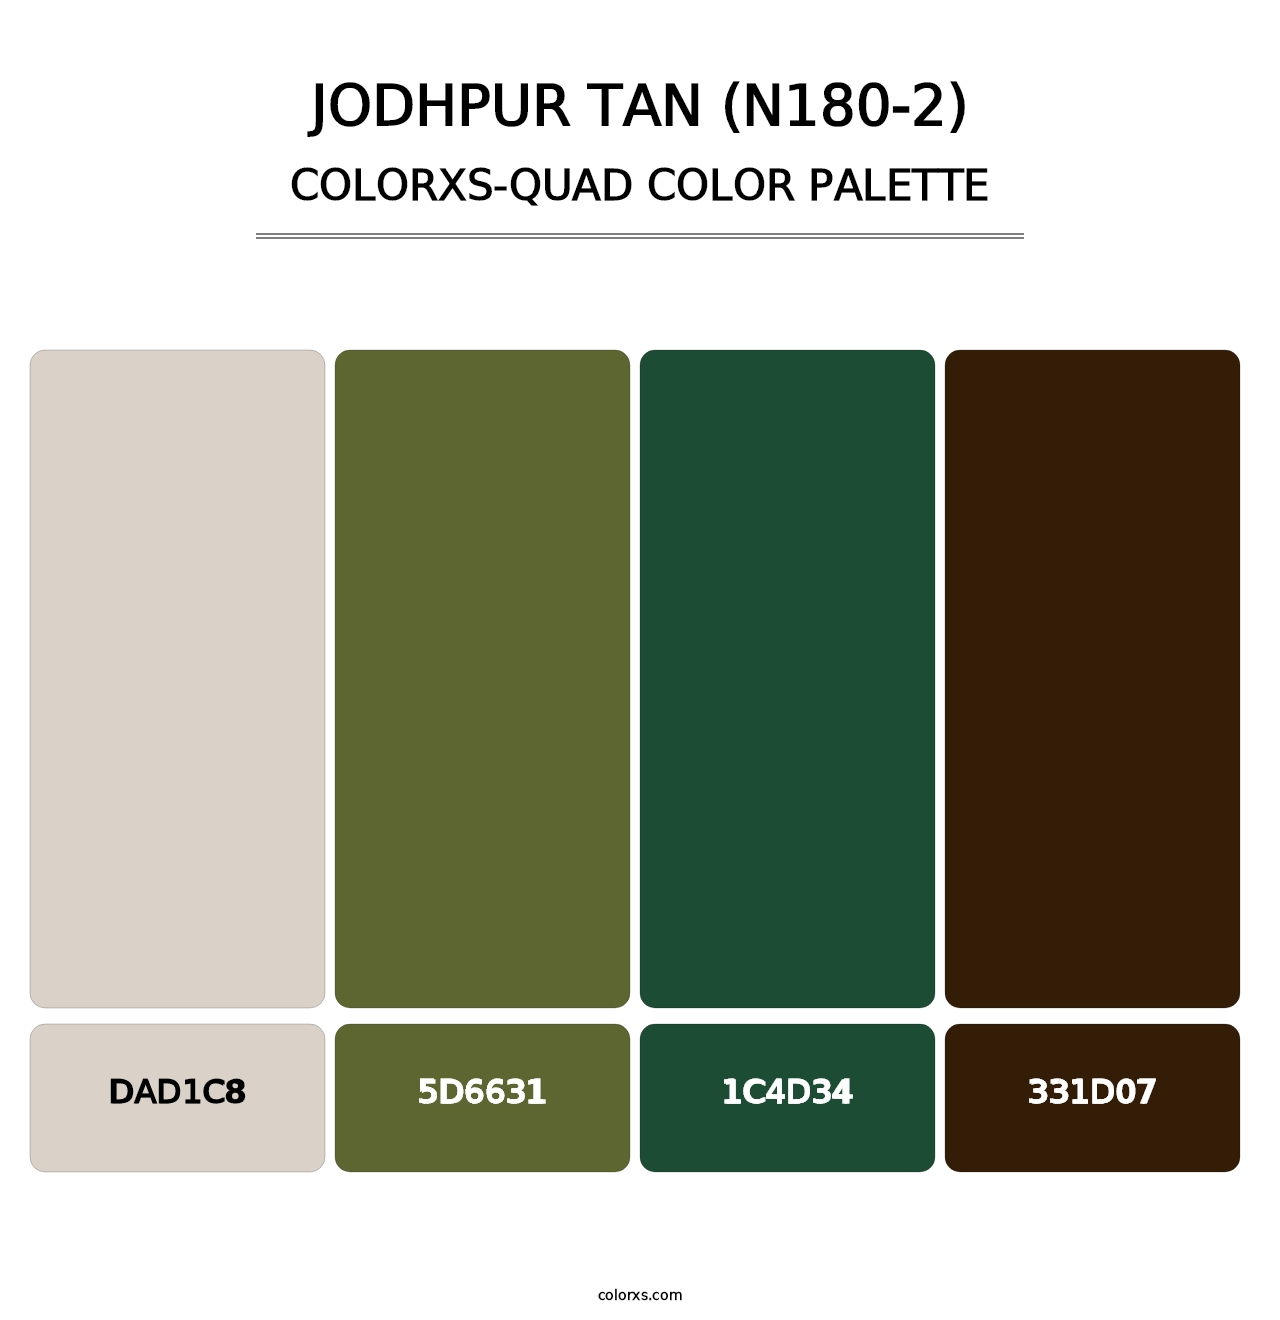 Jodhpur Tan (N180-2) - Colorxs Quad Palette